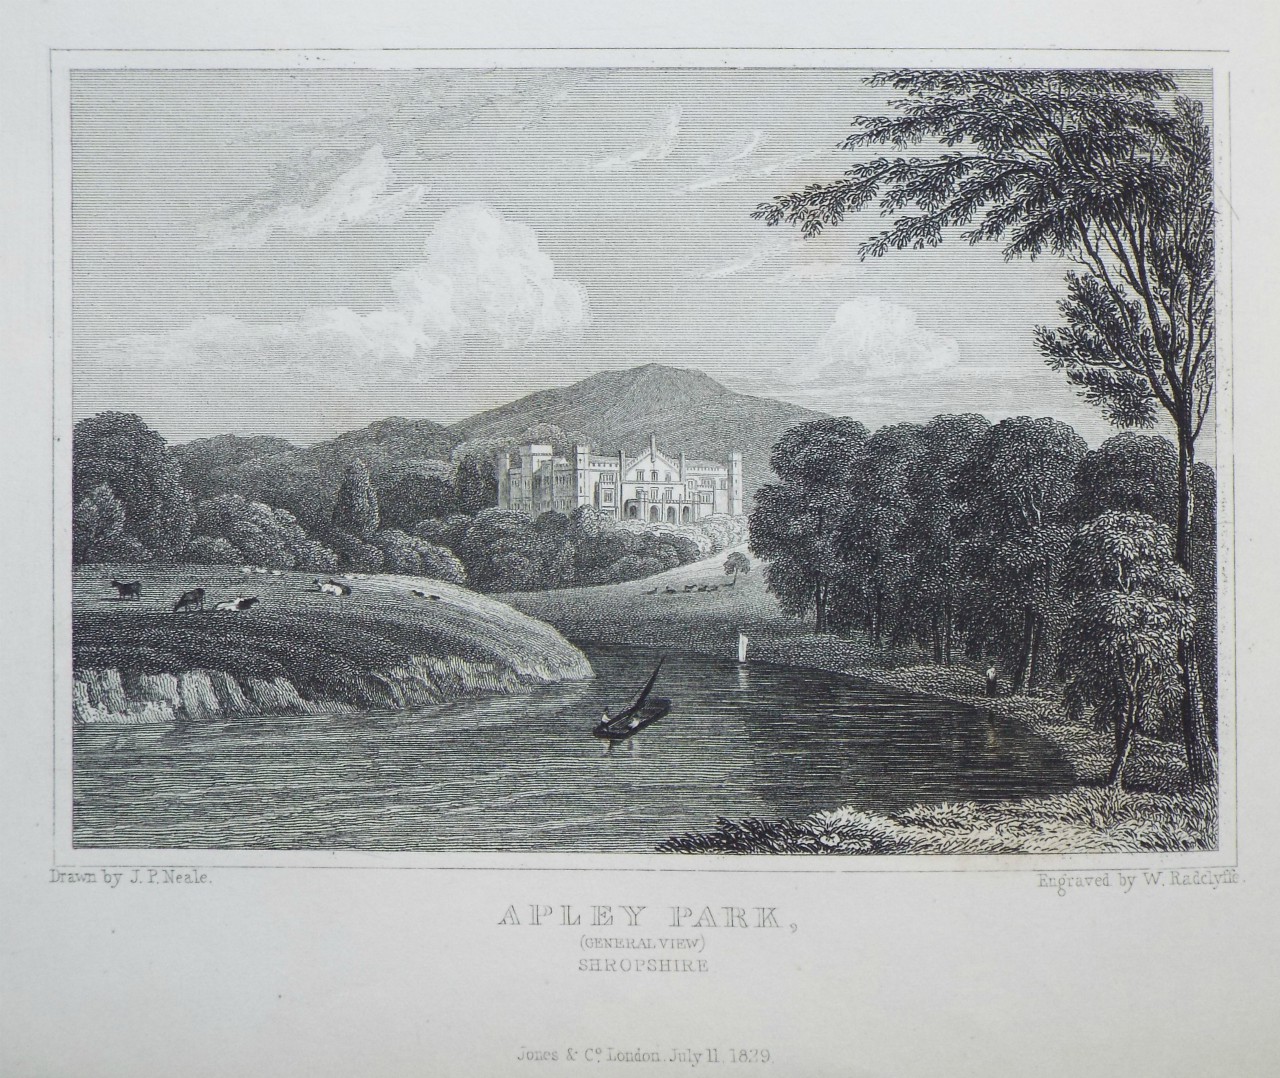 Print - Apley Park, (General View) Shropshire. - Radclyffe